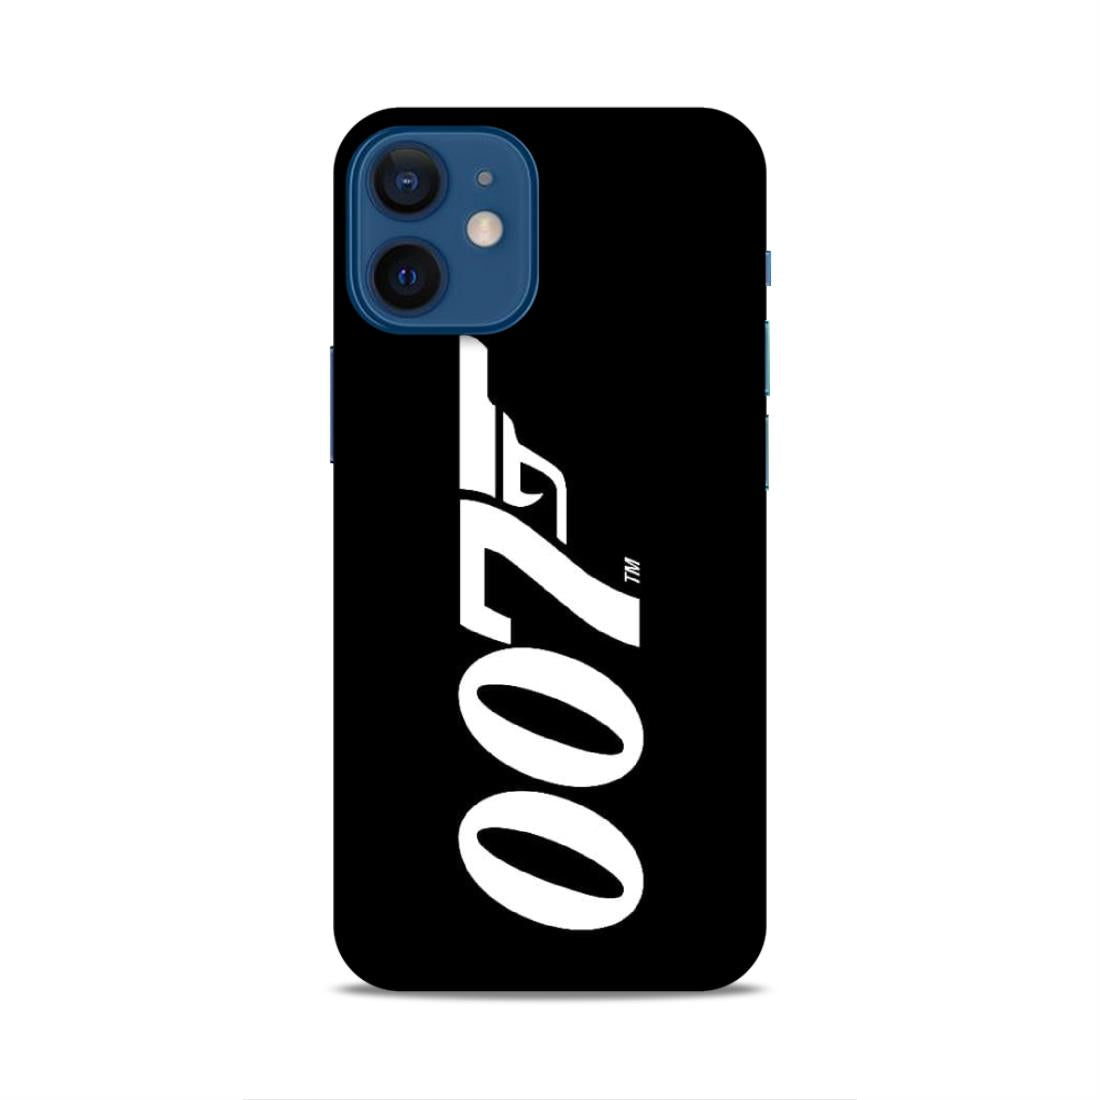 Jems Bond 007 Hard Back Case For Apple iPhone 12 Mini